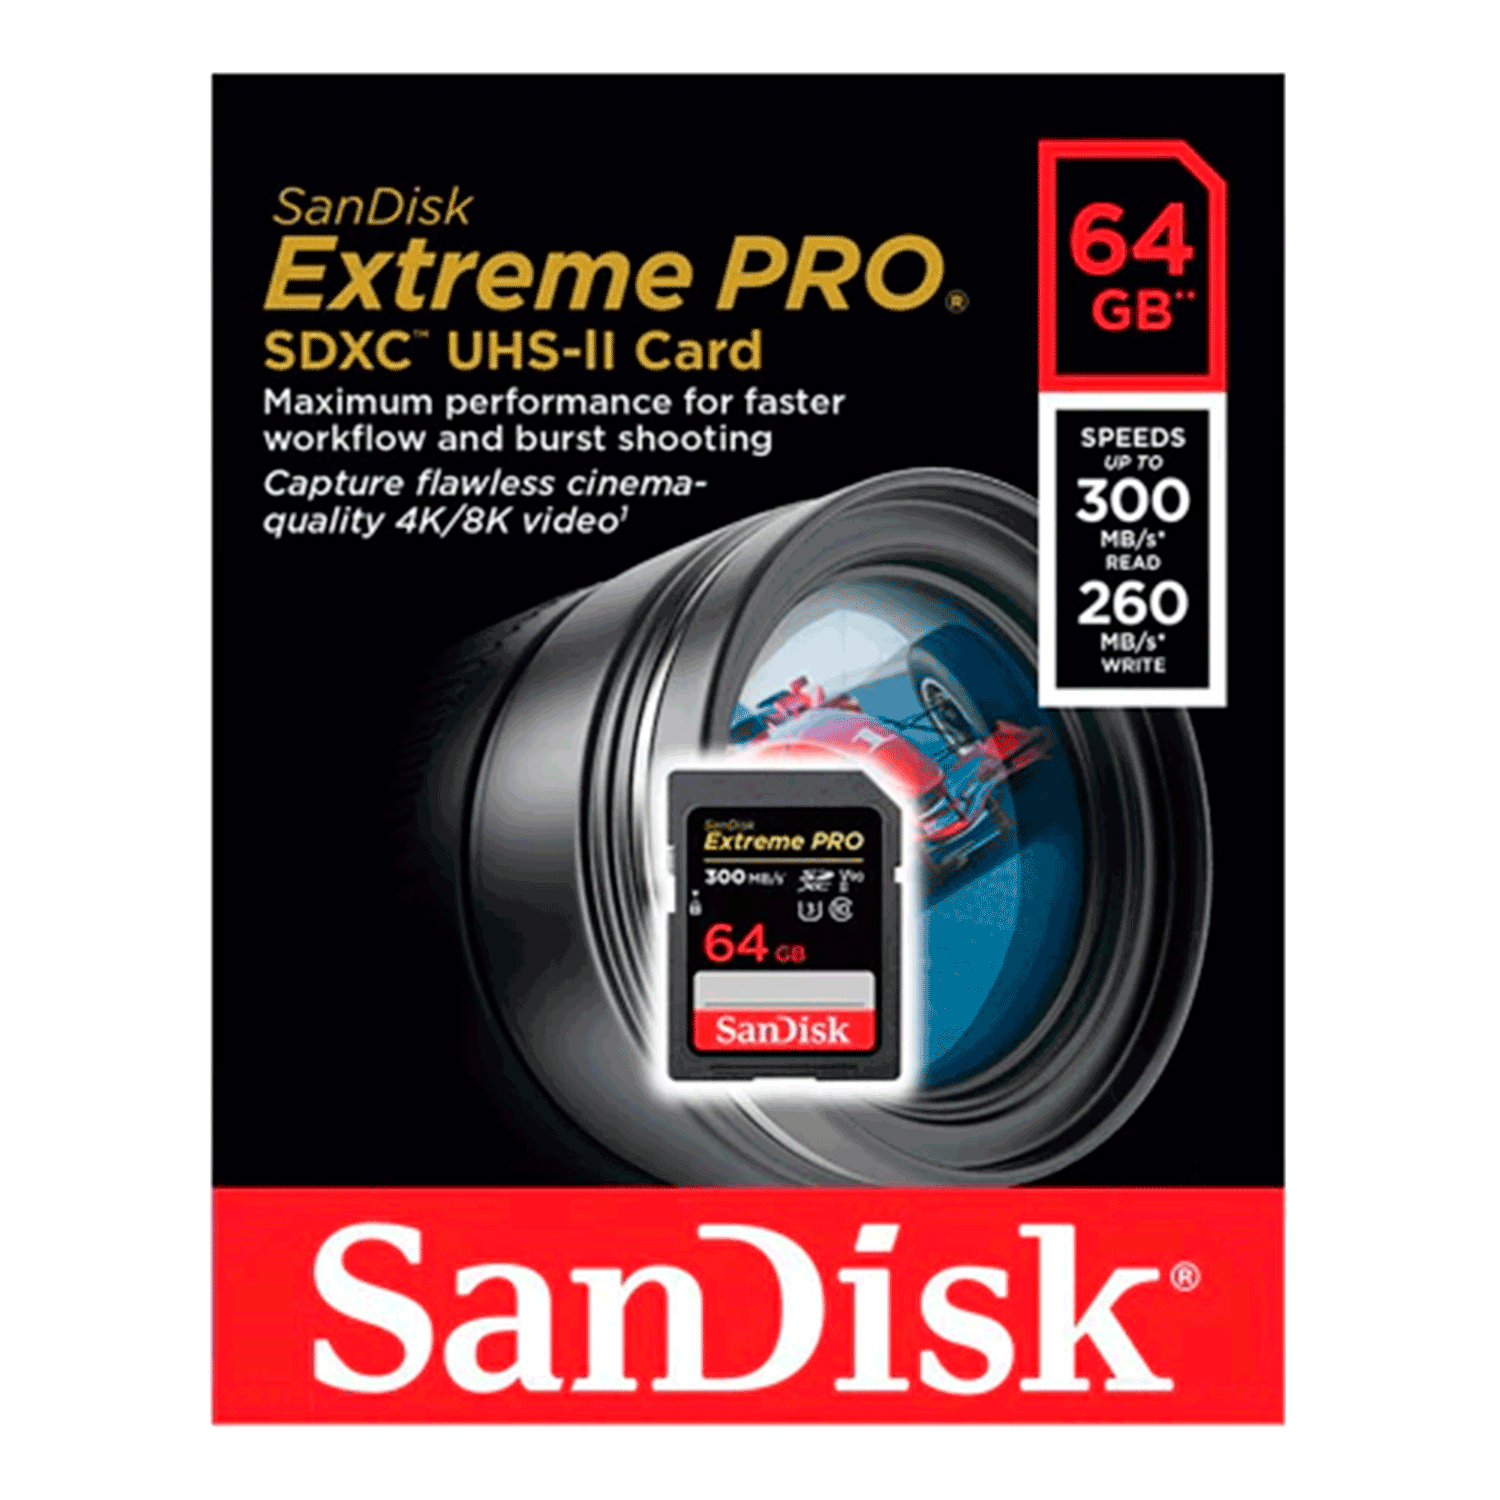 Cartão de Memória SD Sandisk Extreme 64GB / 260MBS / C10 / U3 / 4K - (SDSDXDK-064G-GN4IN)